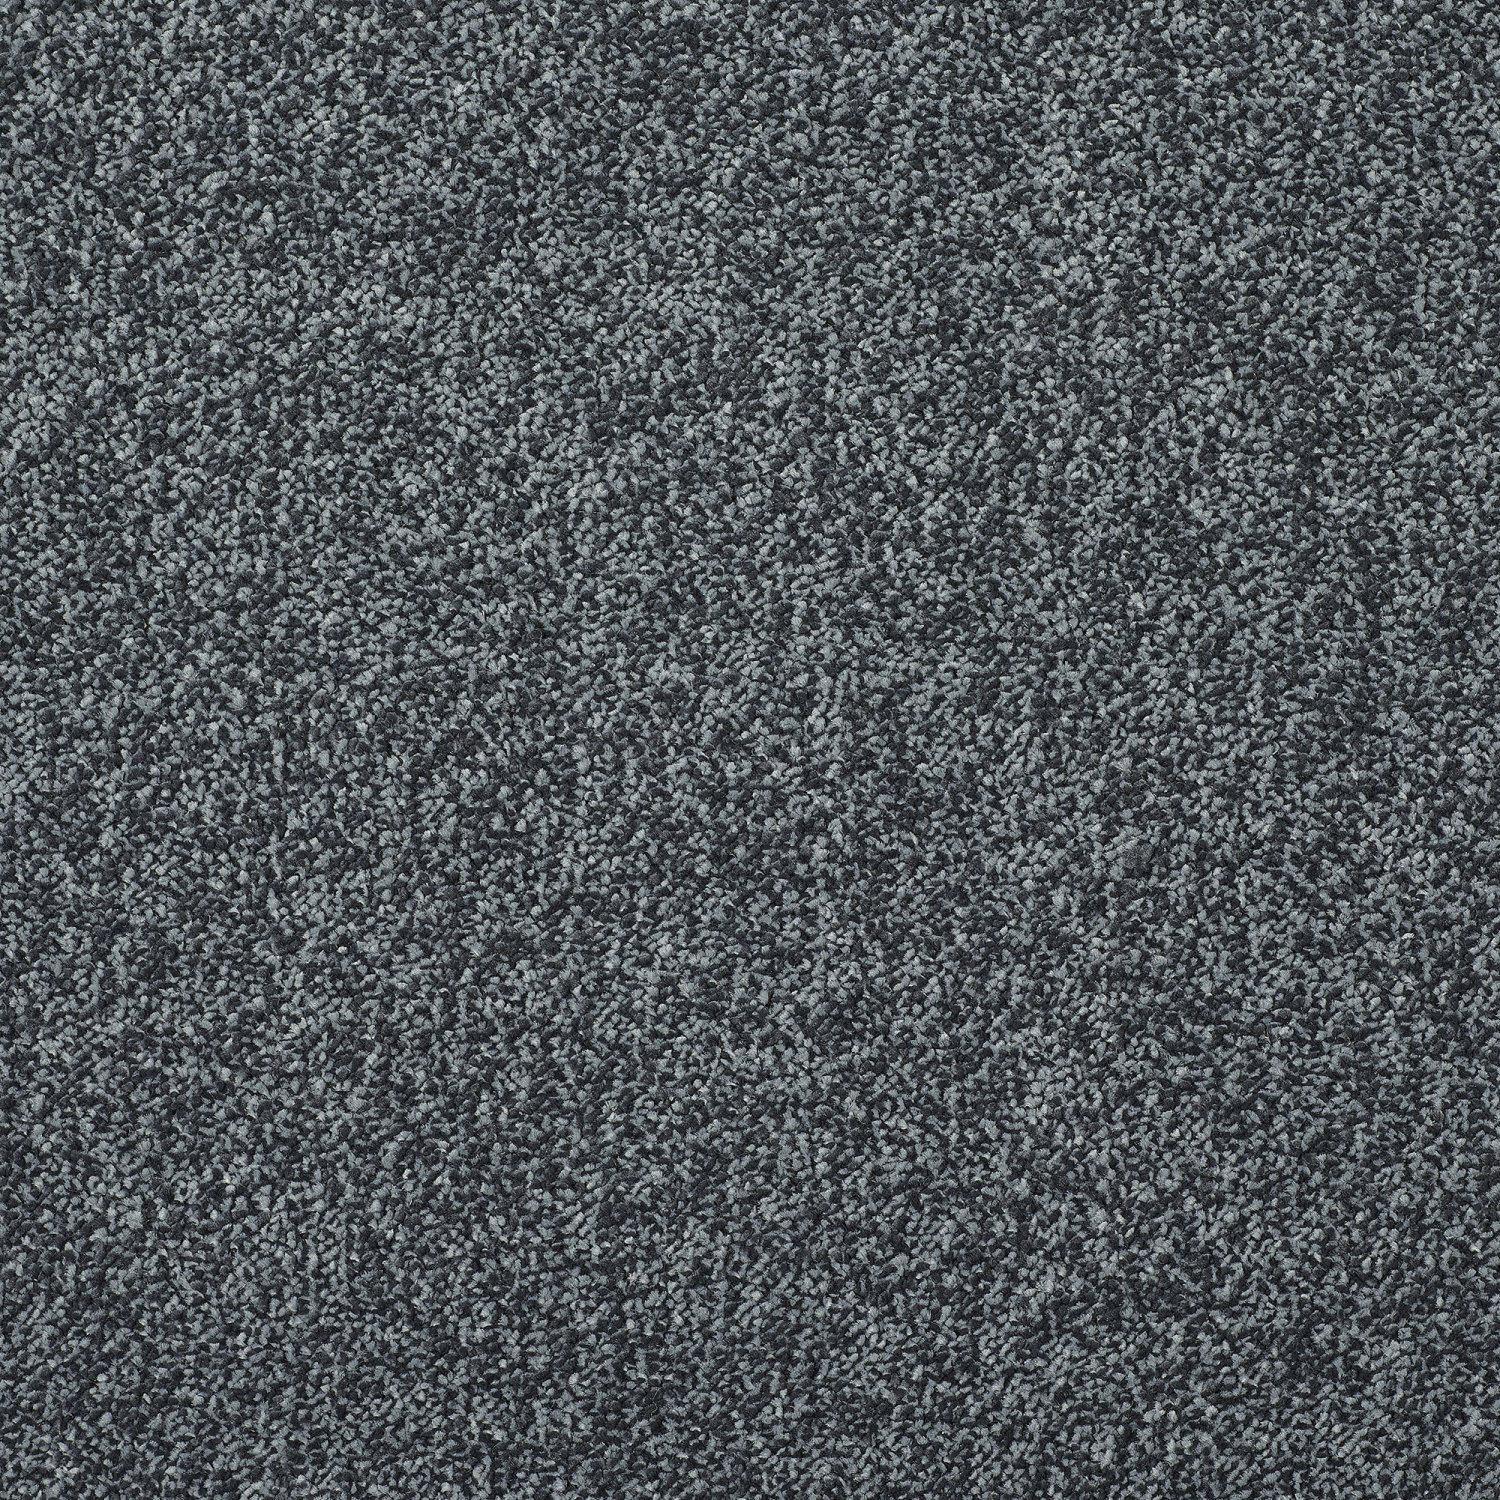 Stainfree Timeless Twist Carpet - 95 Anthracite